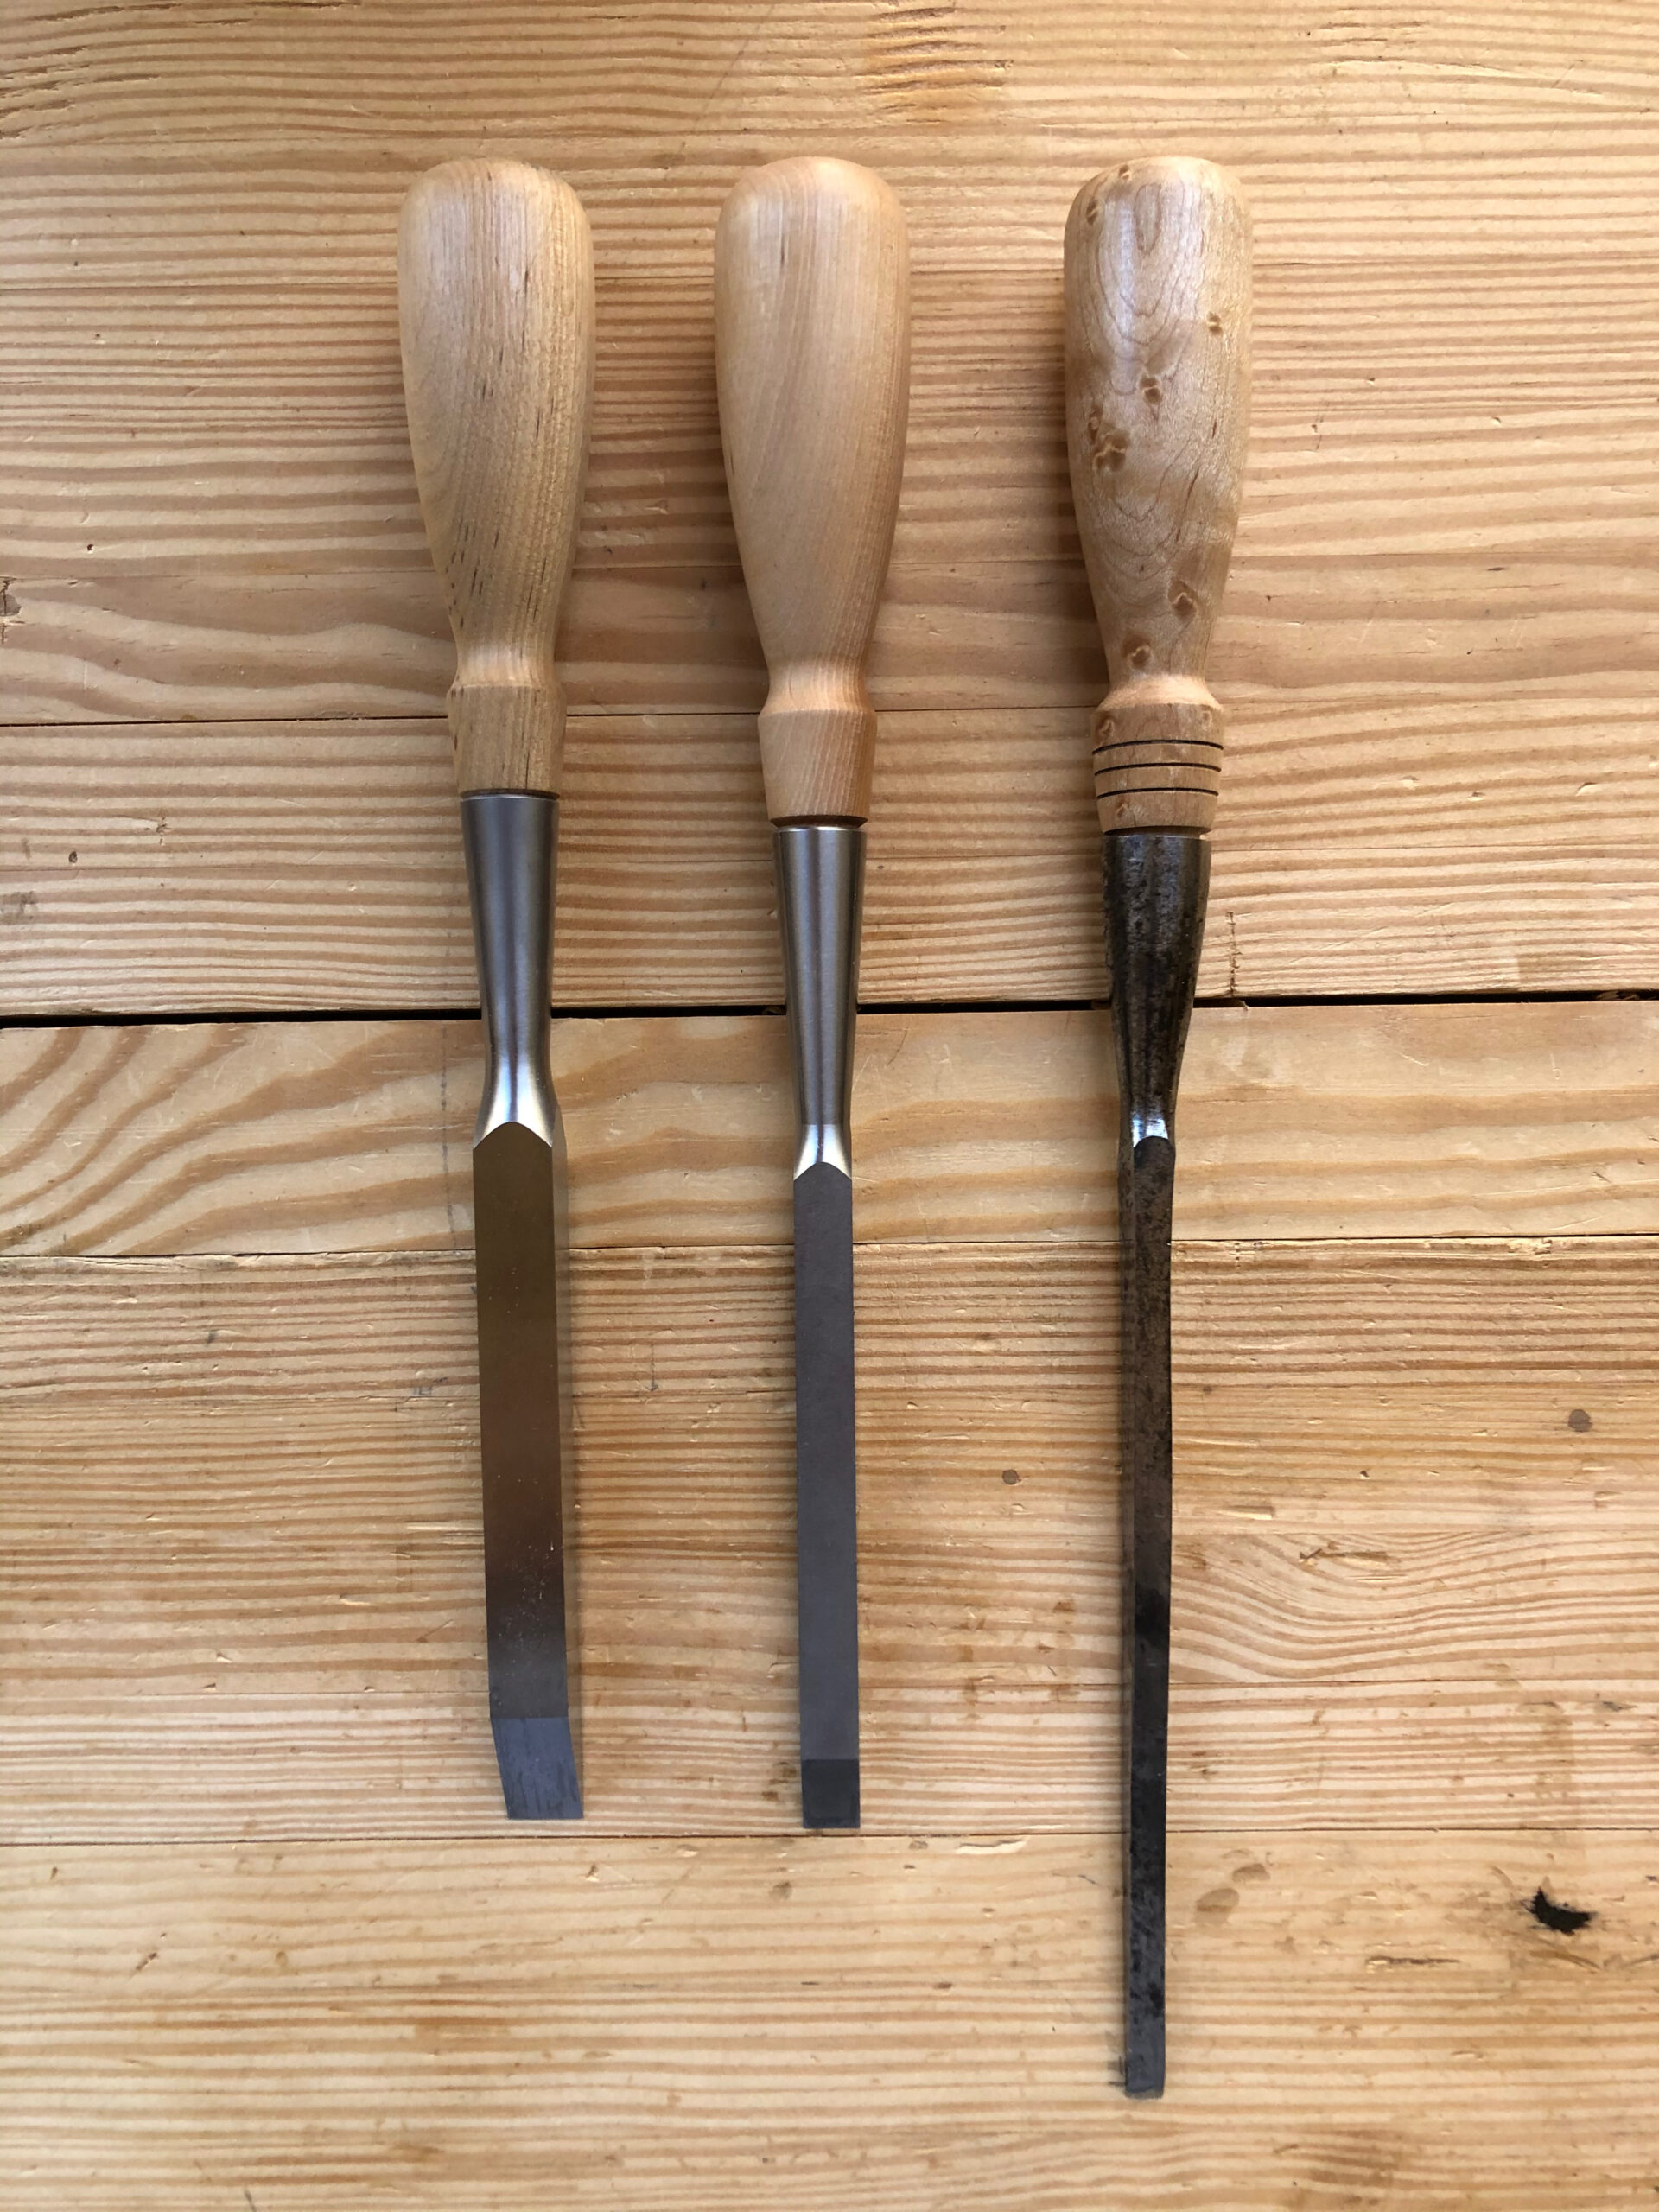 Starrett punch set - tools - by owner - sale - craigslist